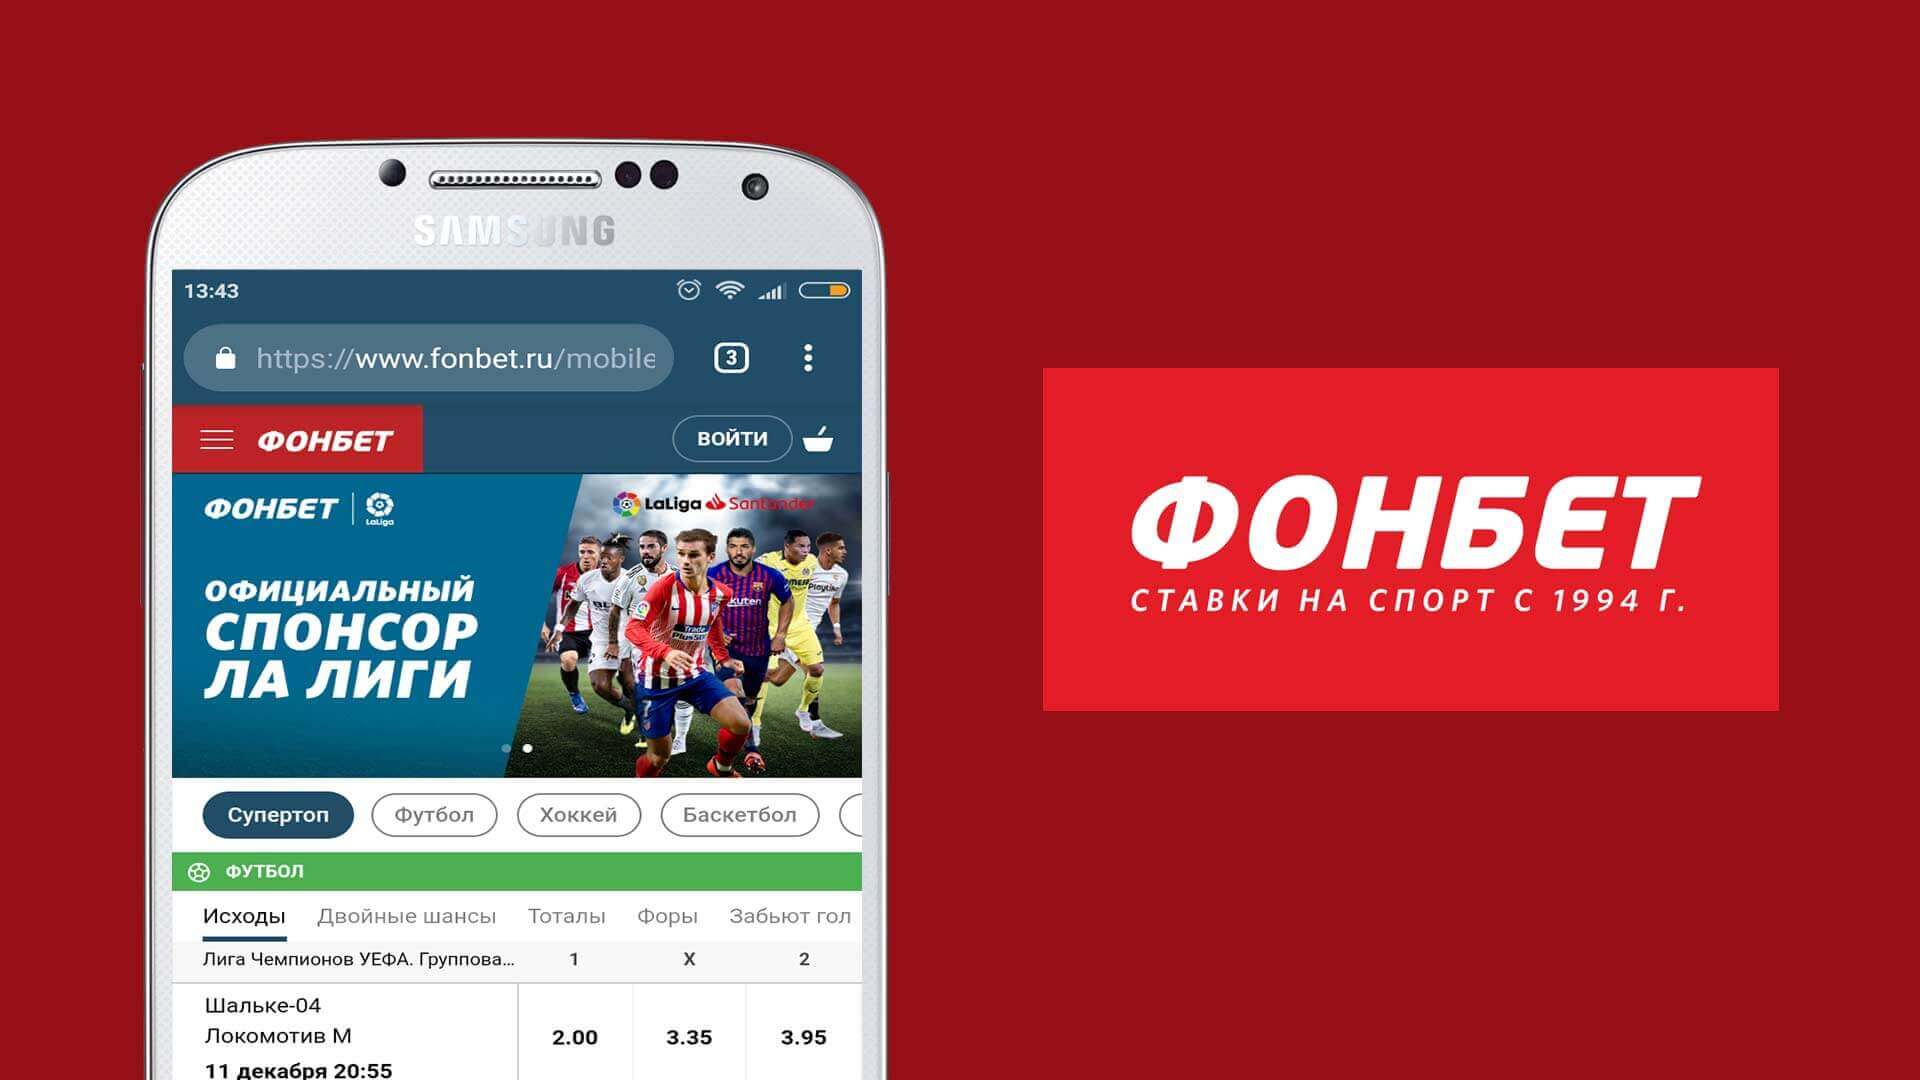 Фонбет ставки с 1994 года на спорт официальный сайт бонусы онлайн казино на рубли